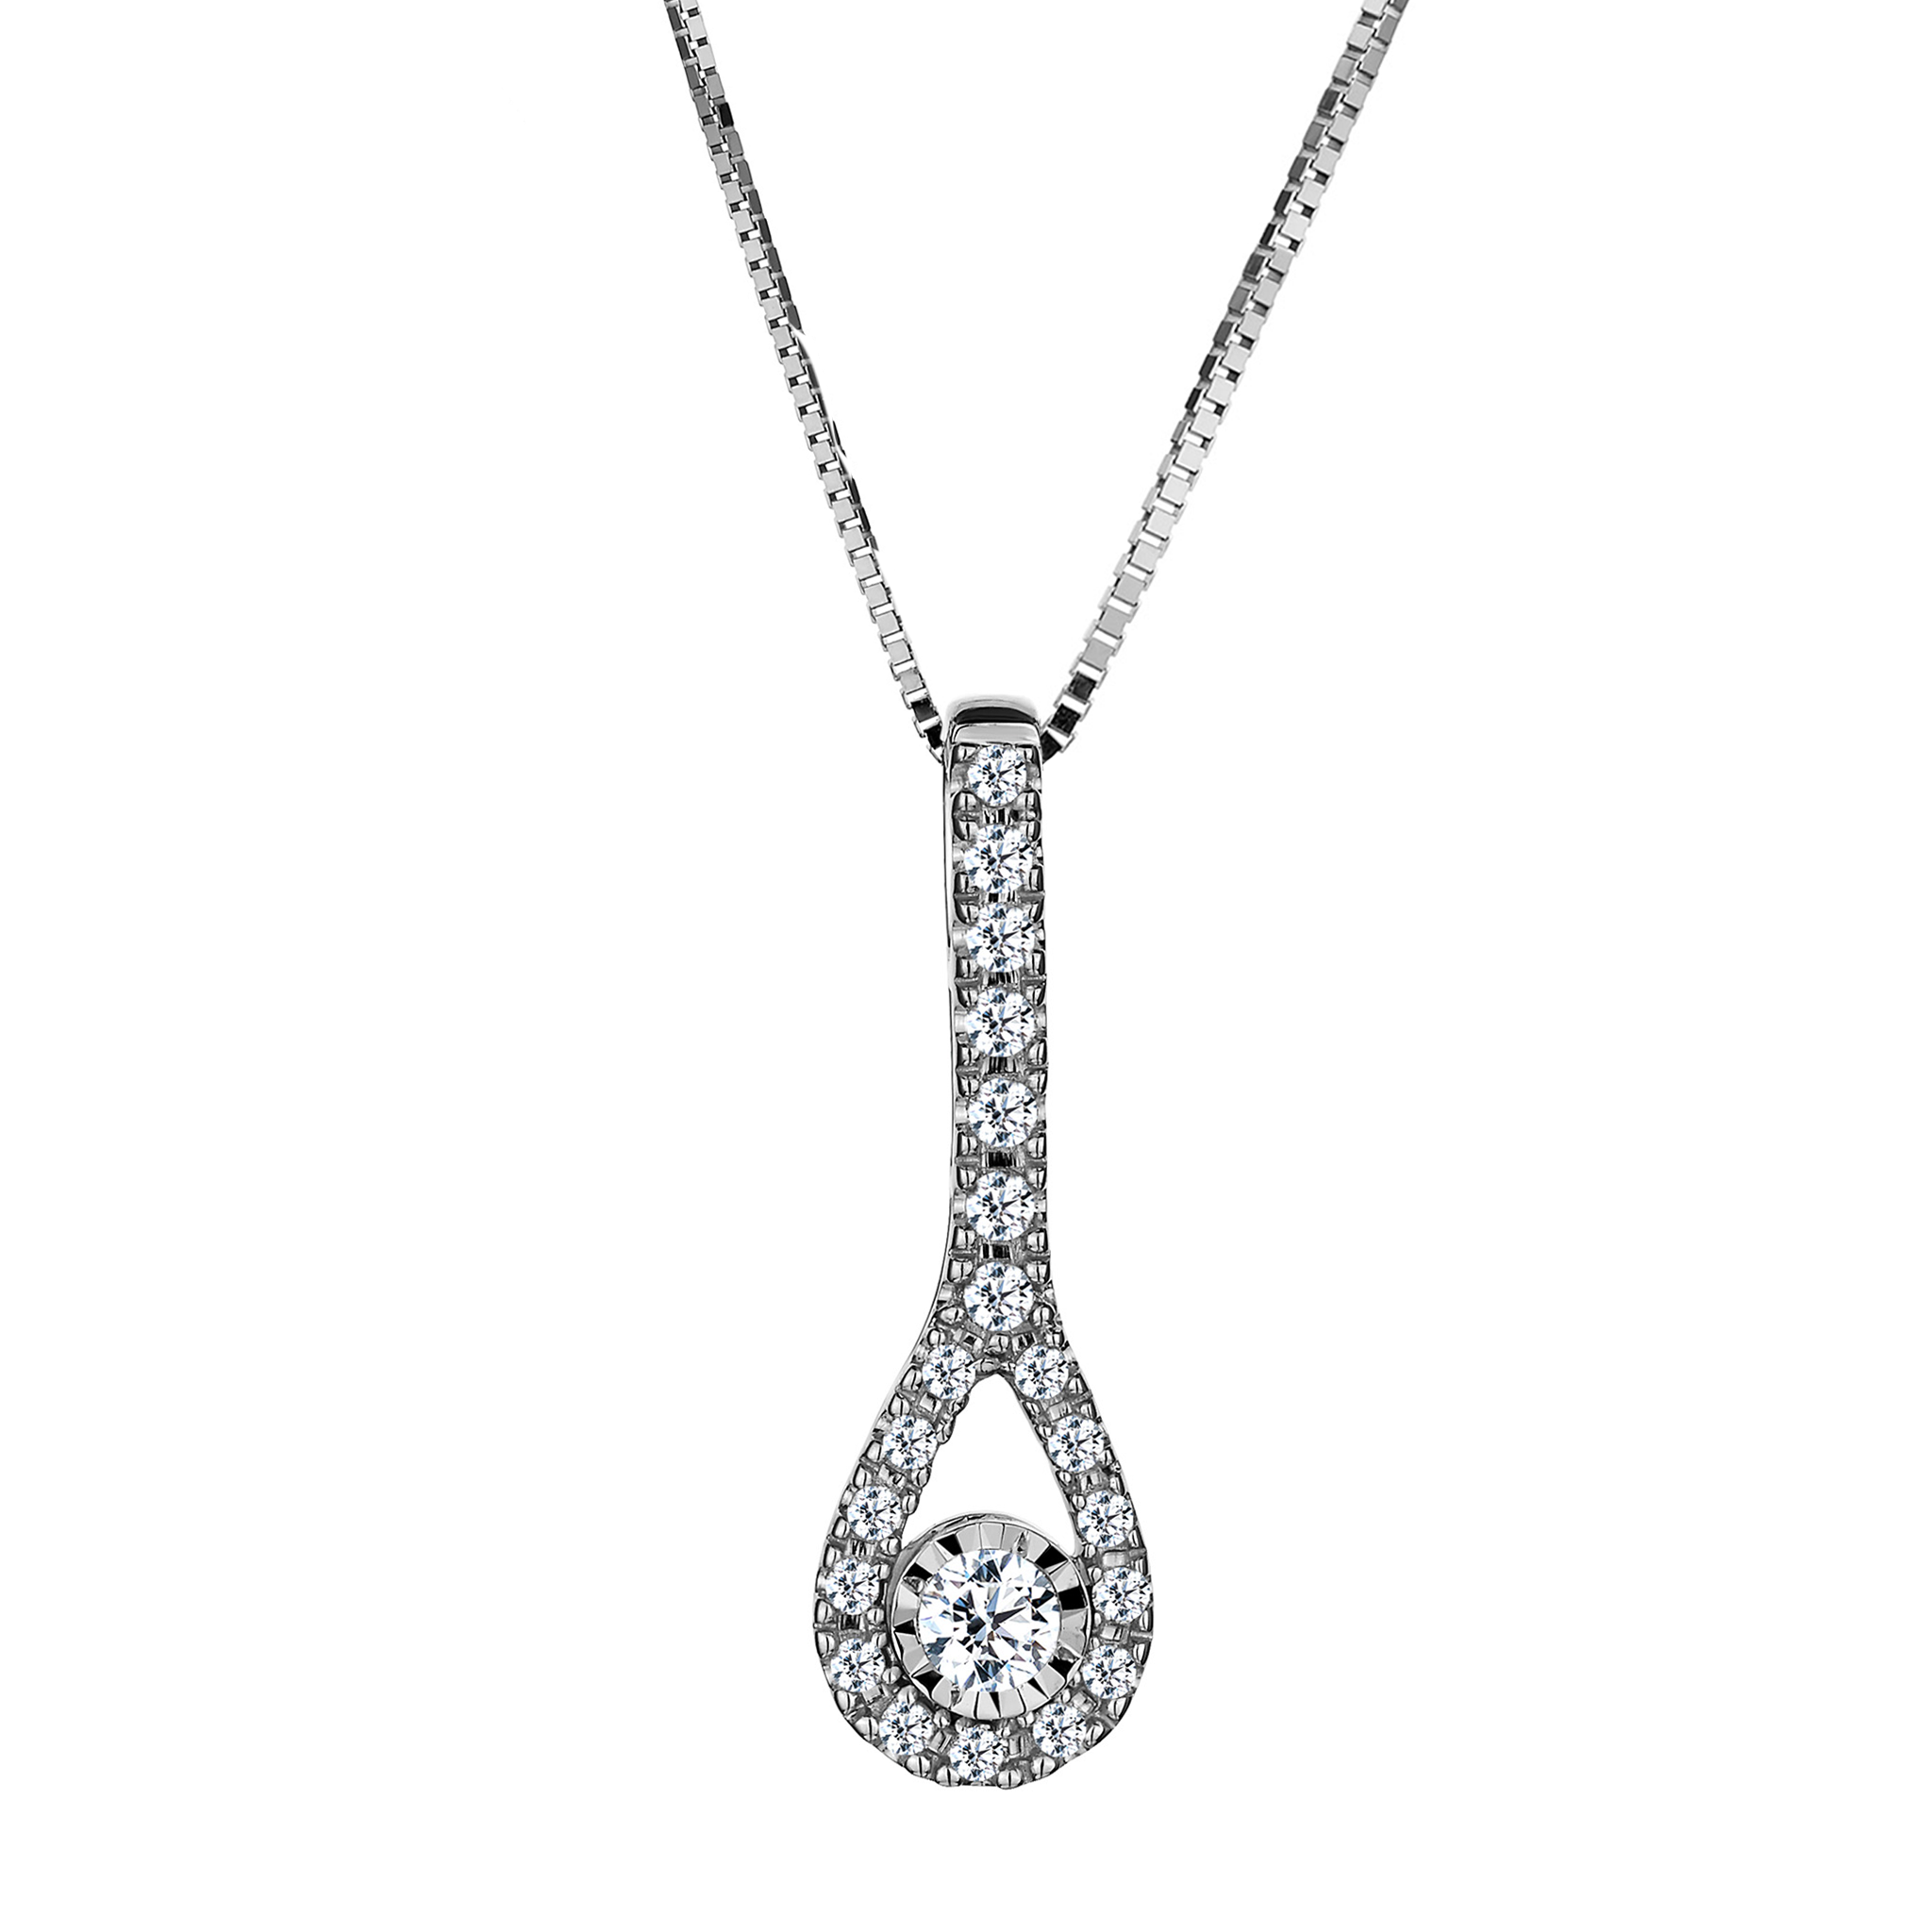 .16 Carat Diamond Drop Pendant,  10kt White Gold. Necklaces and Pendants. Griffin Jewellery Designs.